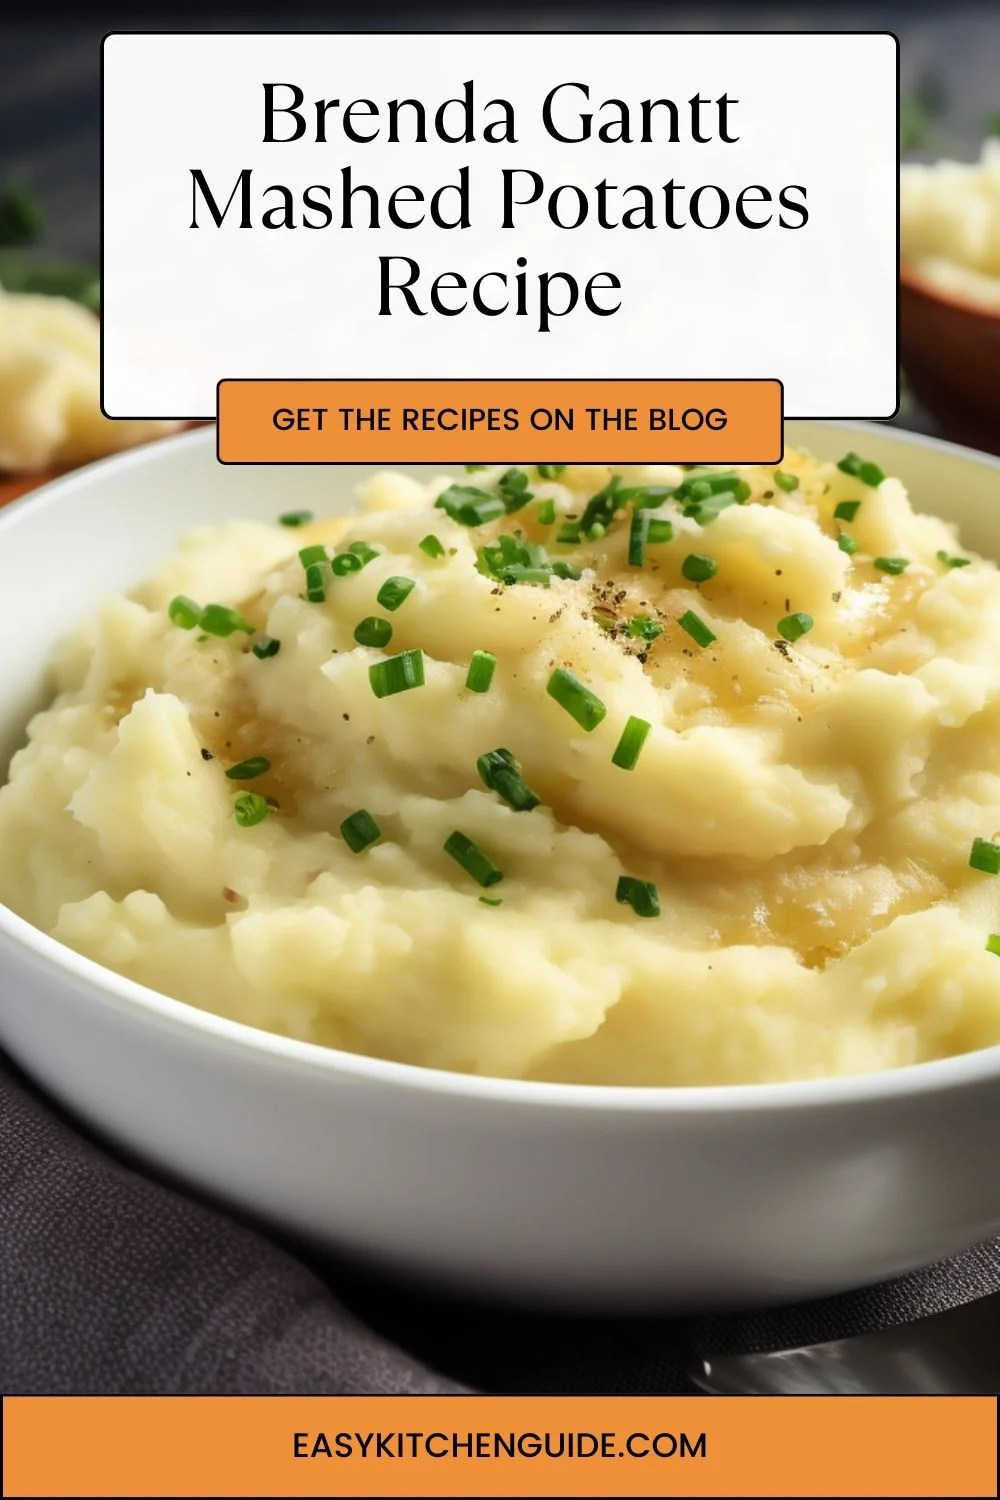 Brenda Gantt Mashed Potatoes Recipe